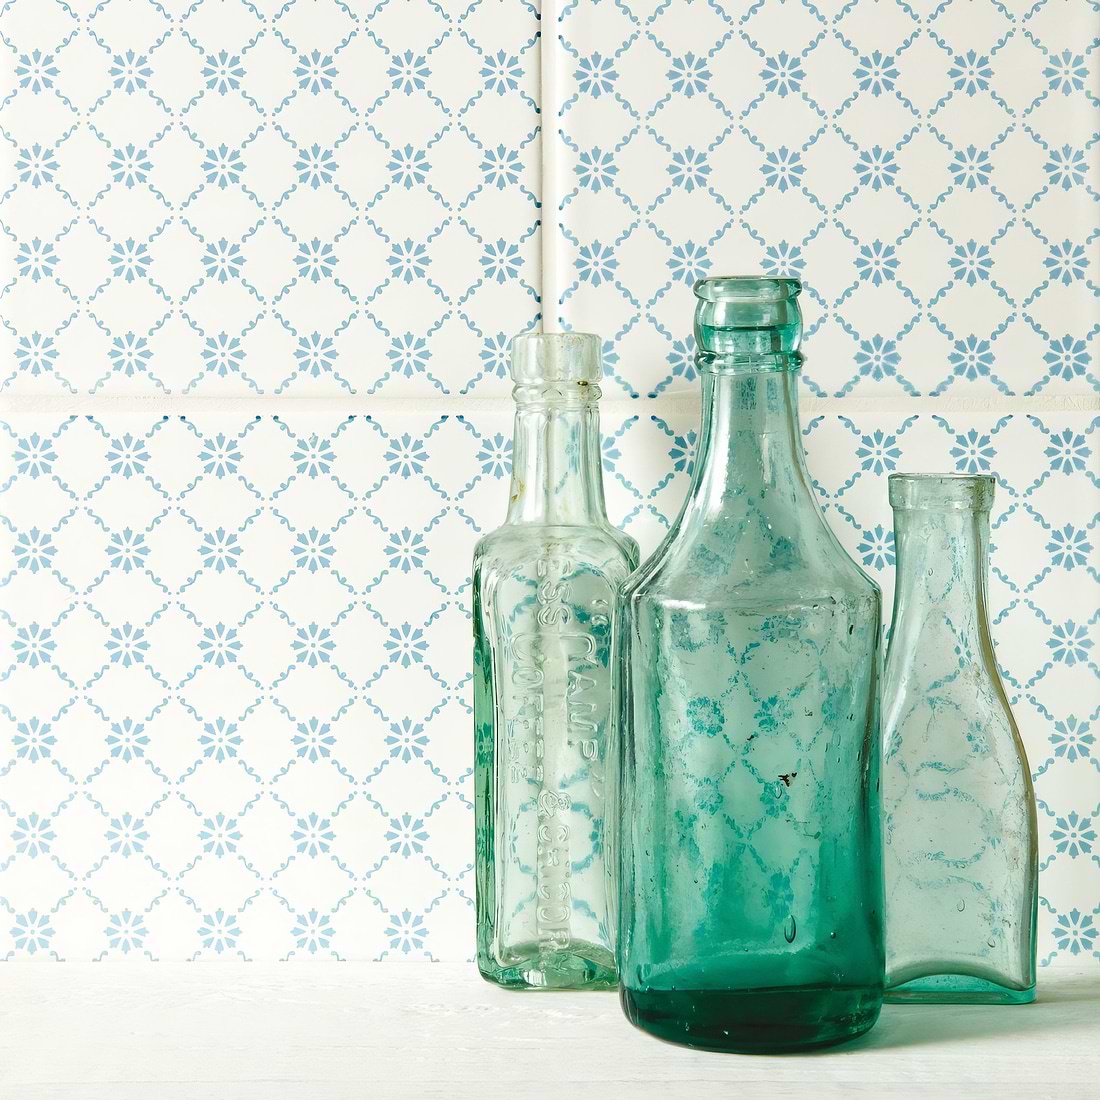 Floral Trellis Blue on Brilliant White - Hyperion Tiles